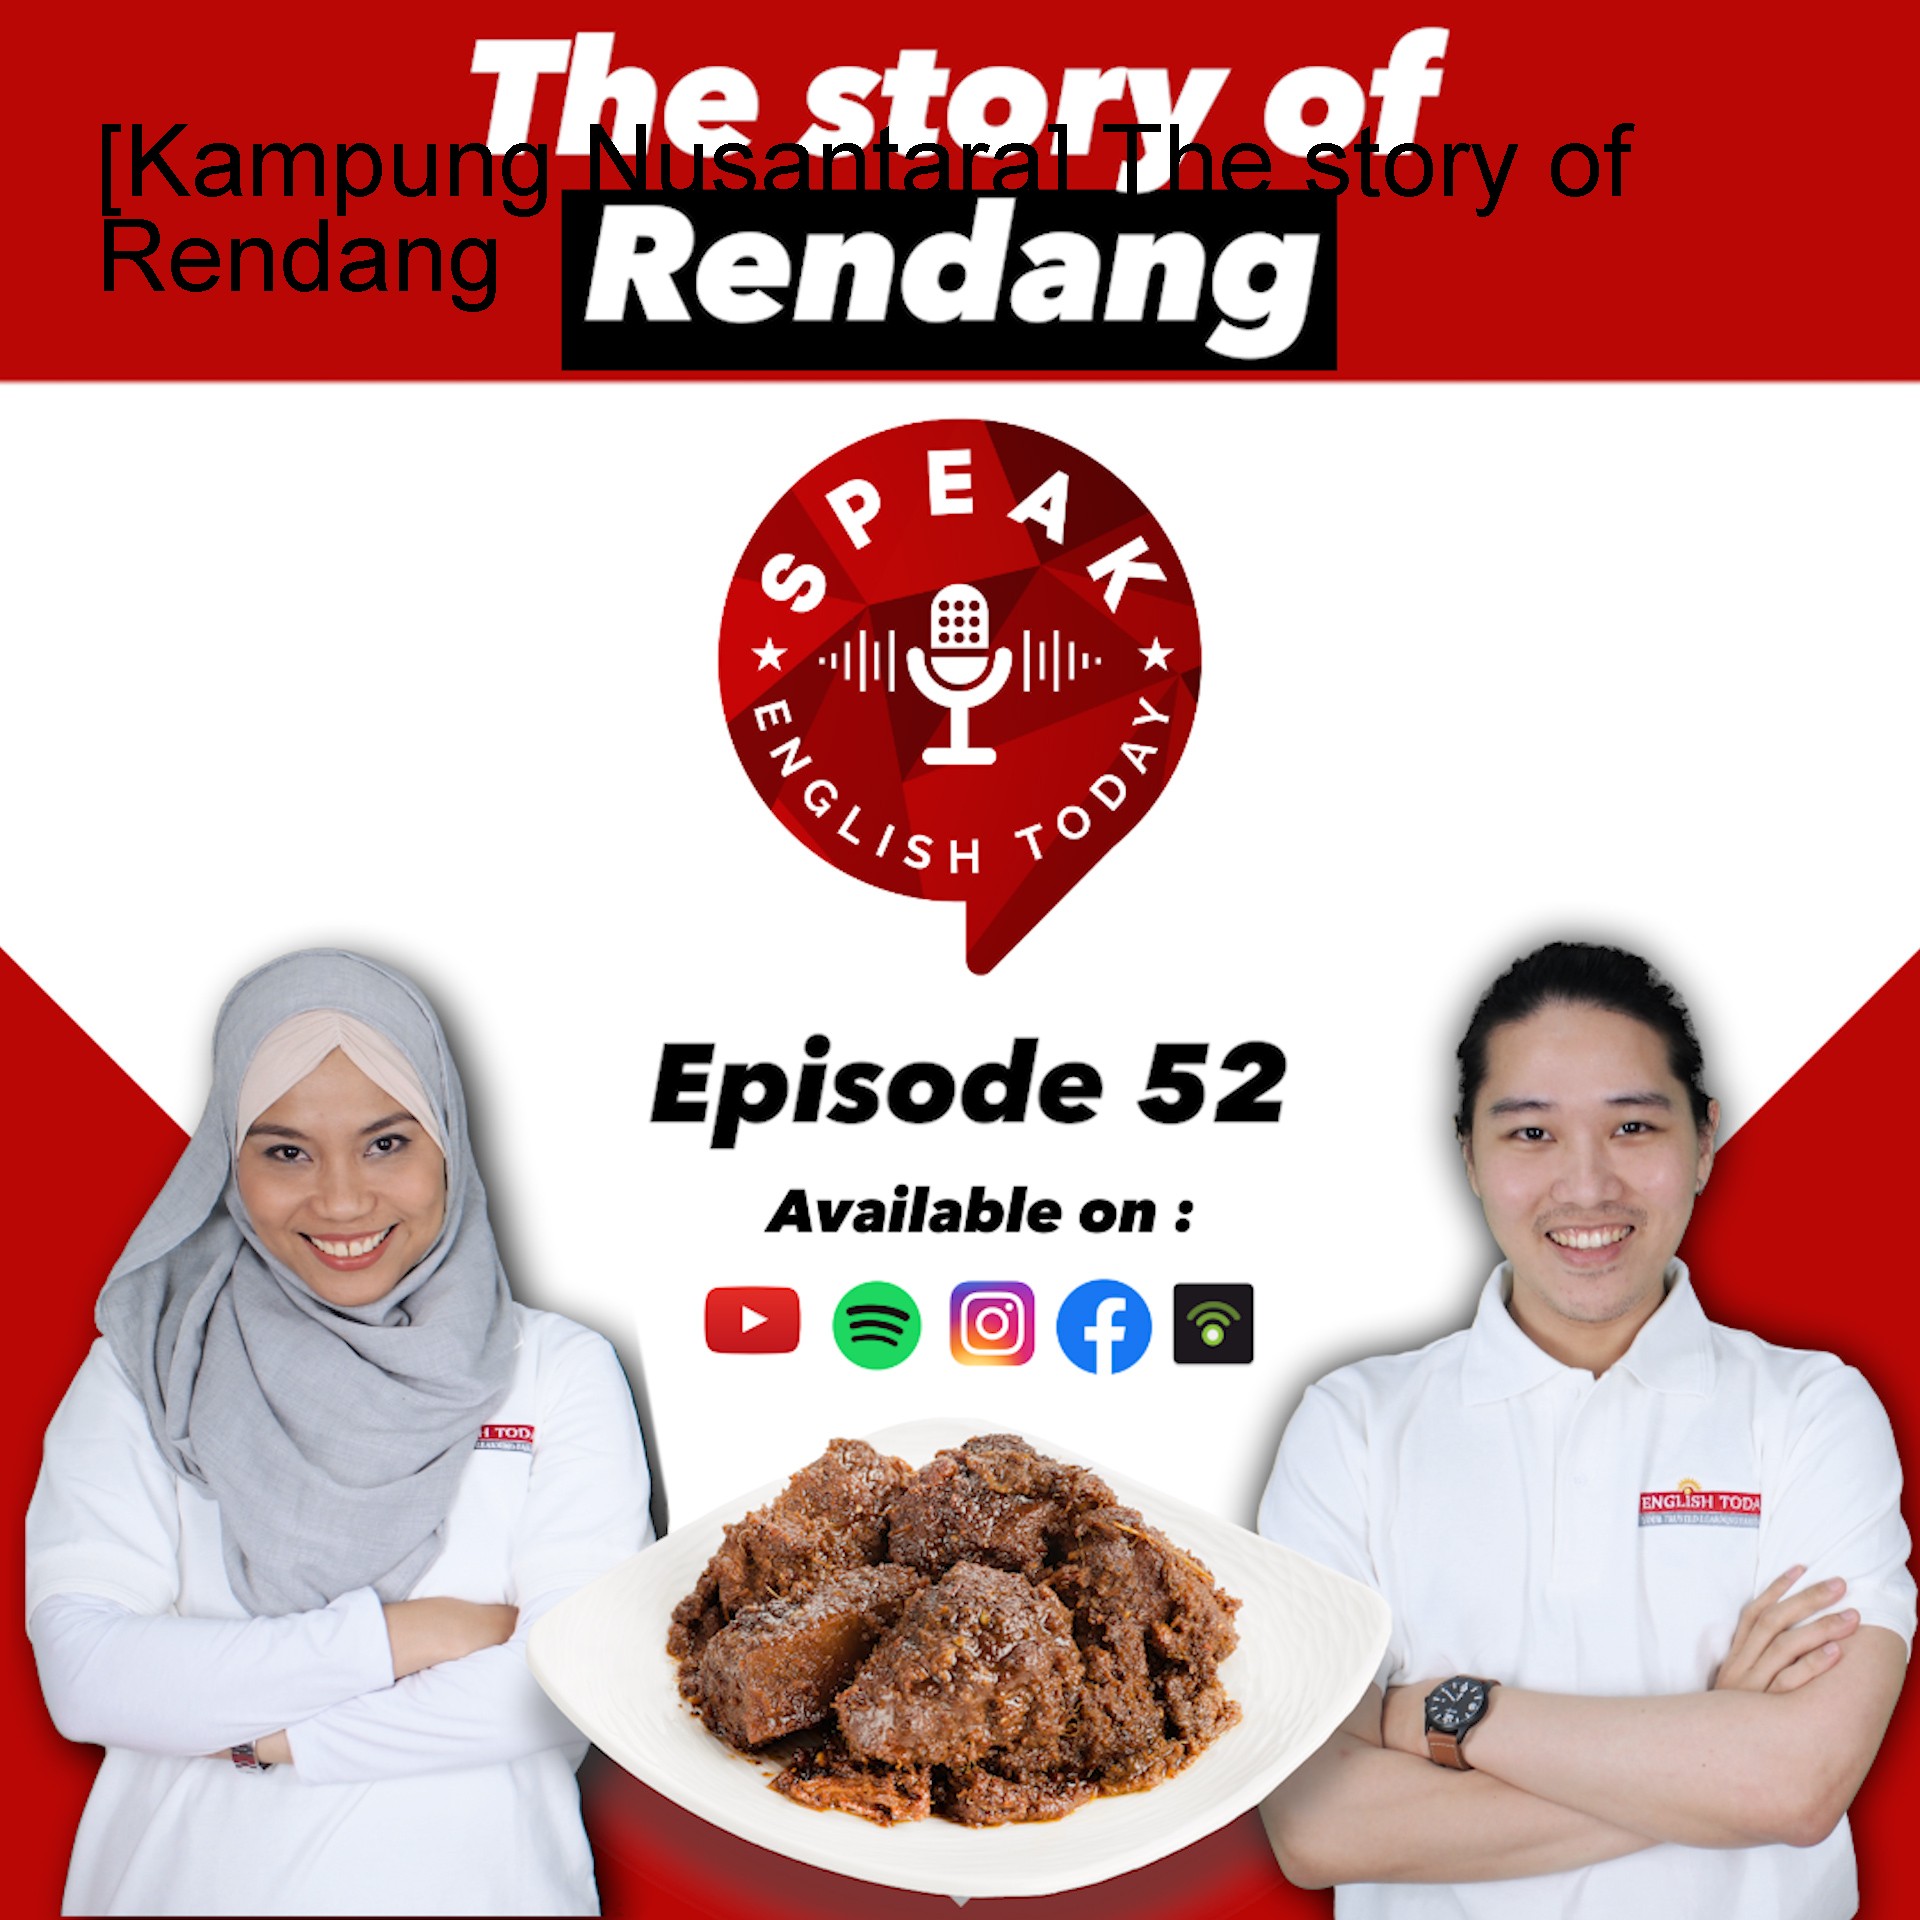 [Kampung Nusantara] The story of Rendang